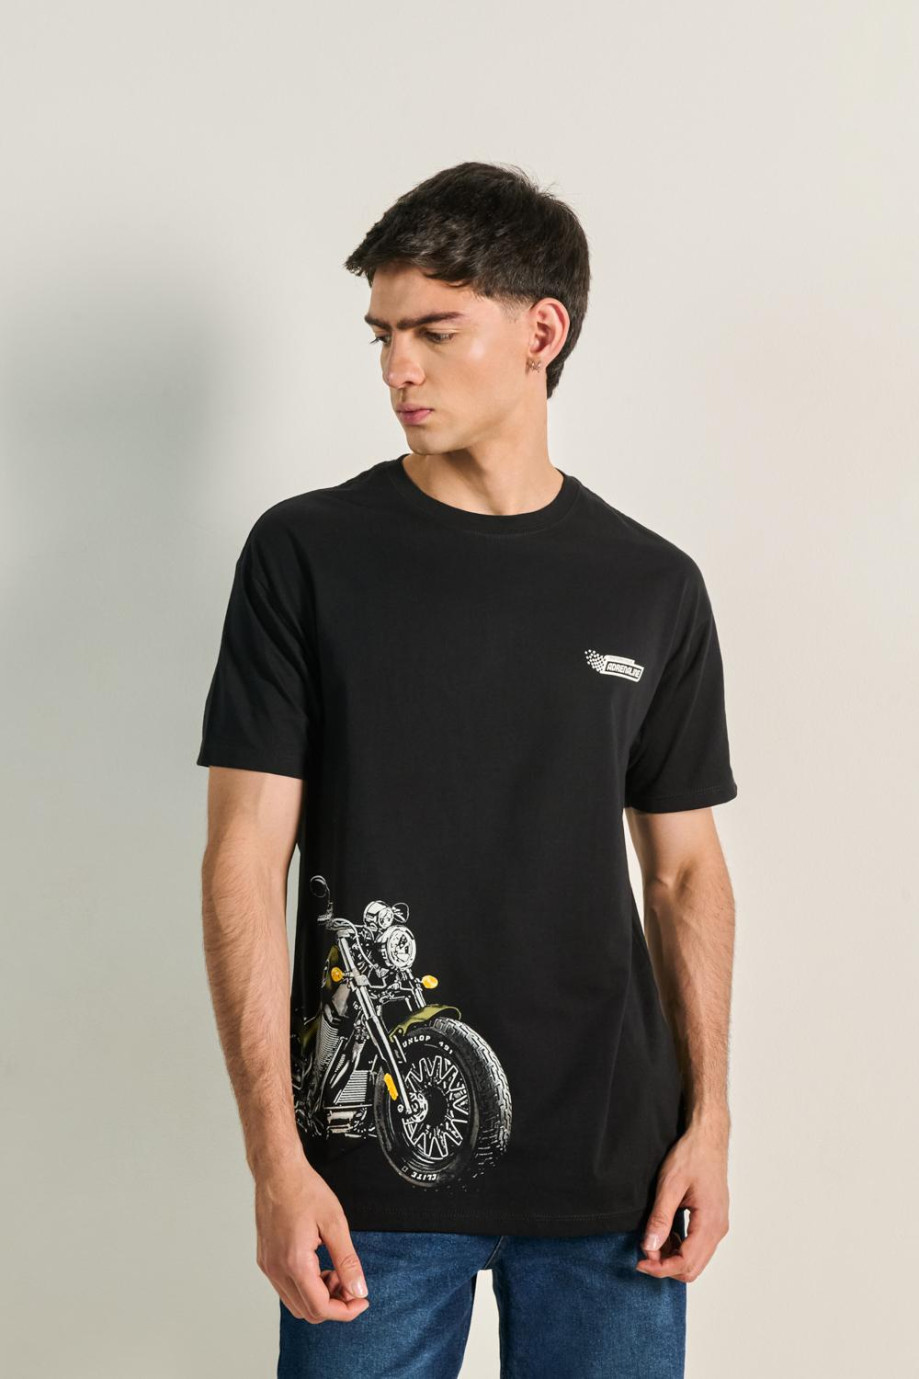 Camiseta unicolor manga corta con diseño racer de vehículo